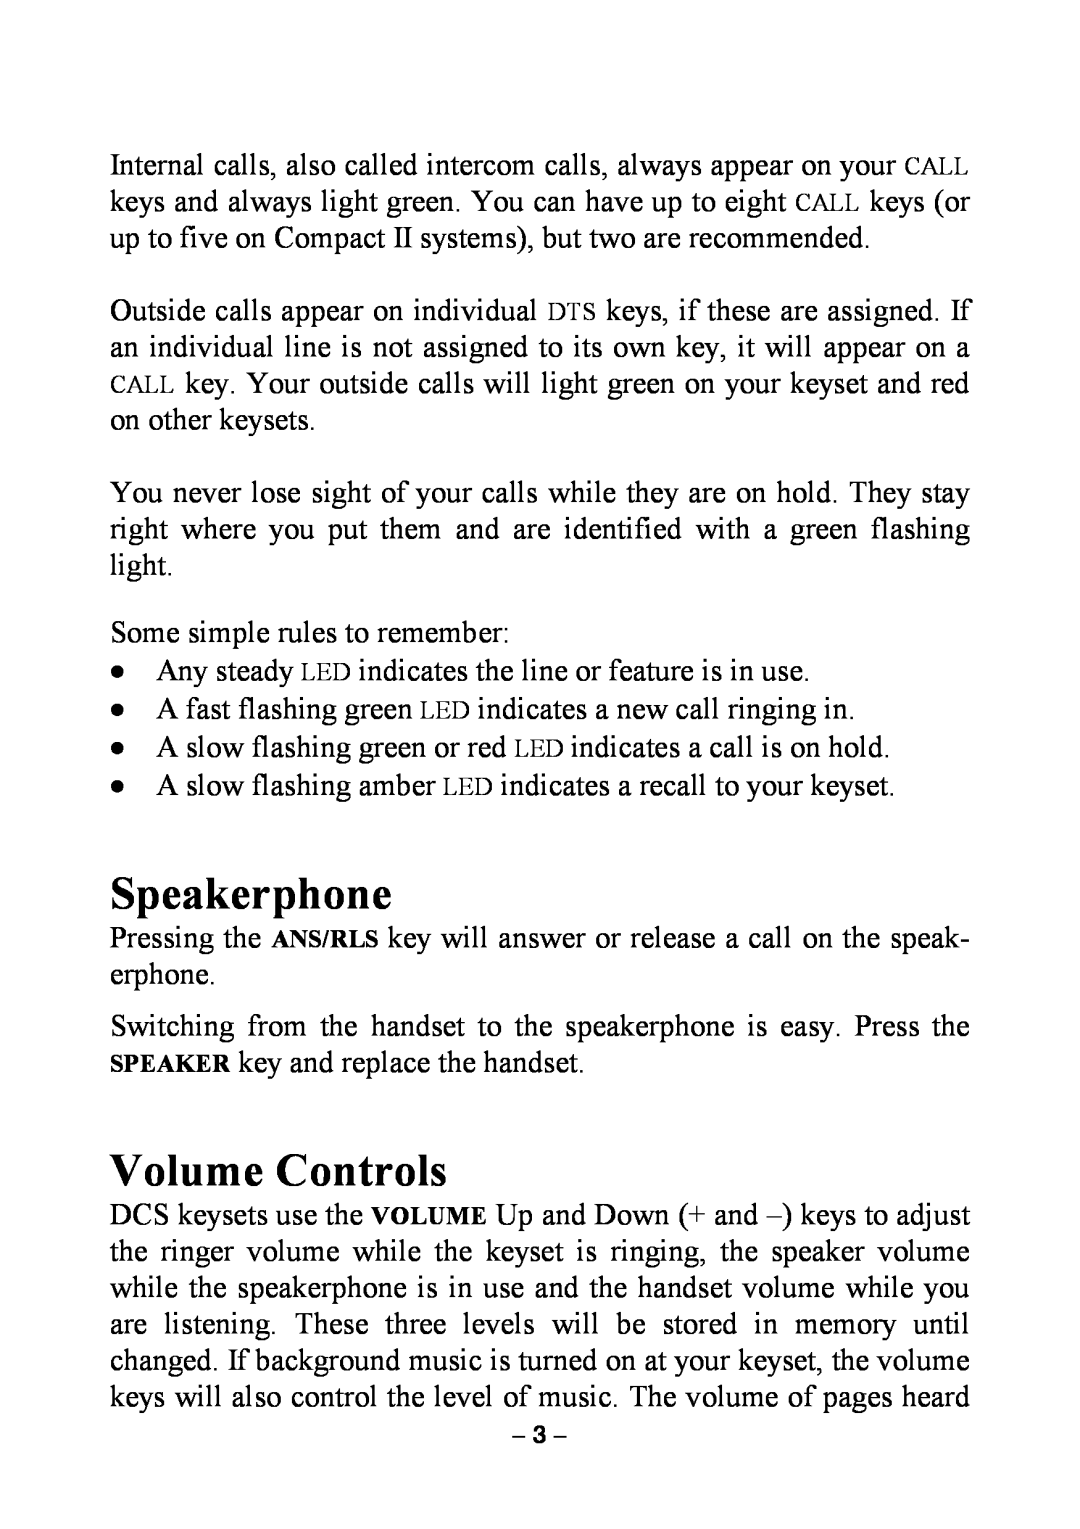 Samsung DCS KEYSET manual Speakerphone, Volume Controls 